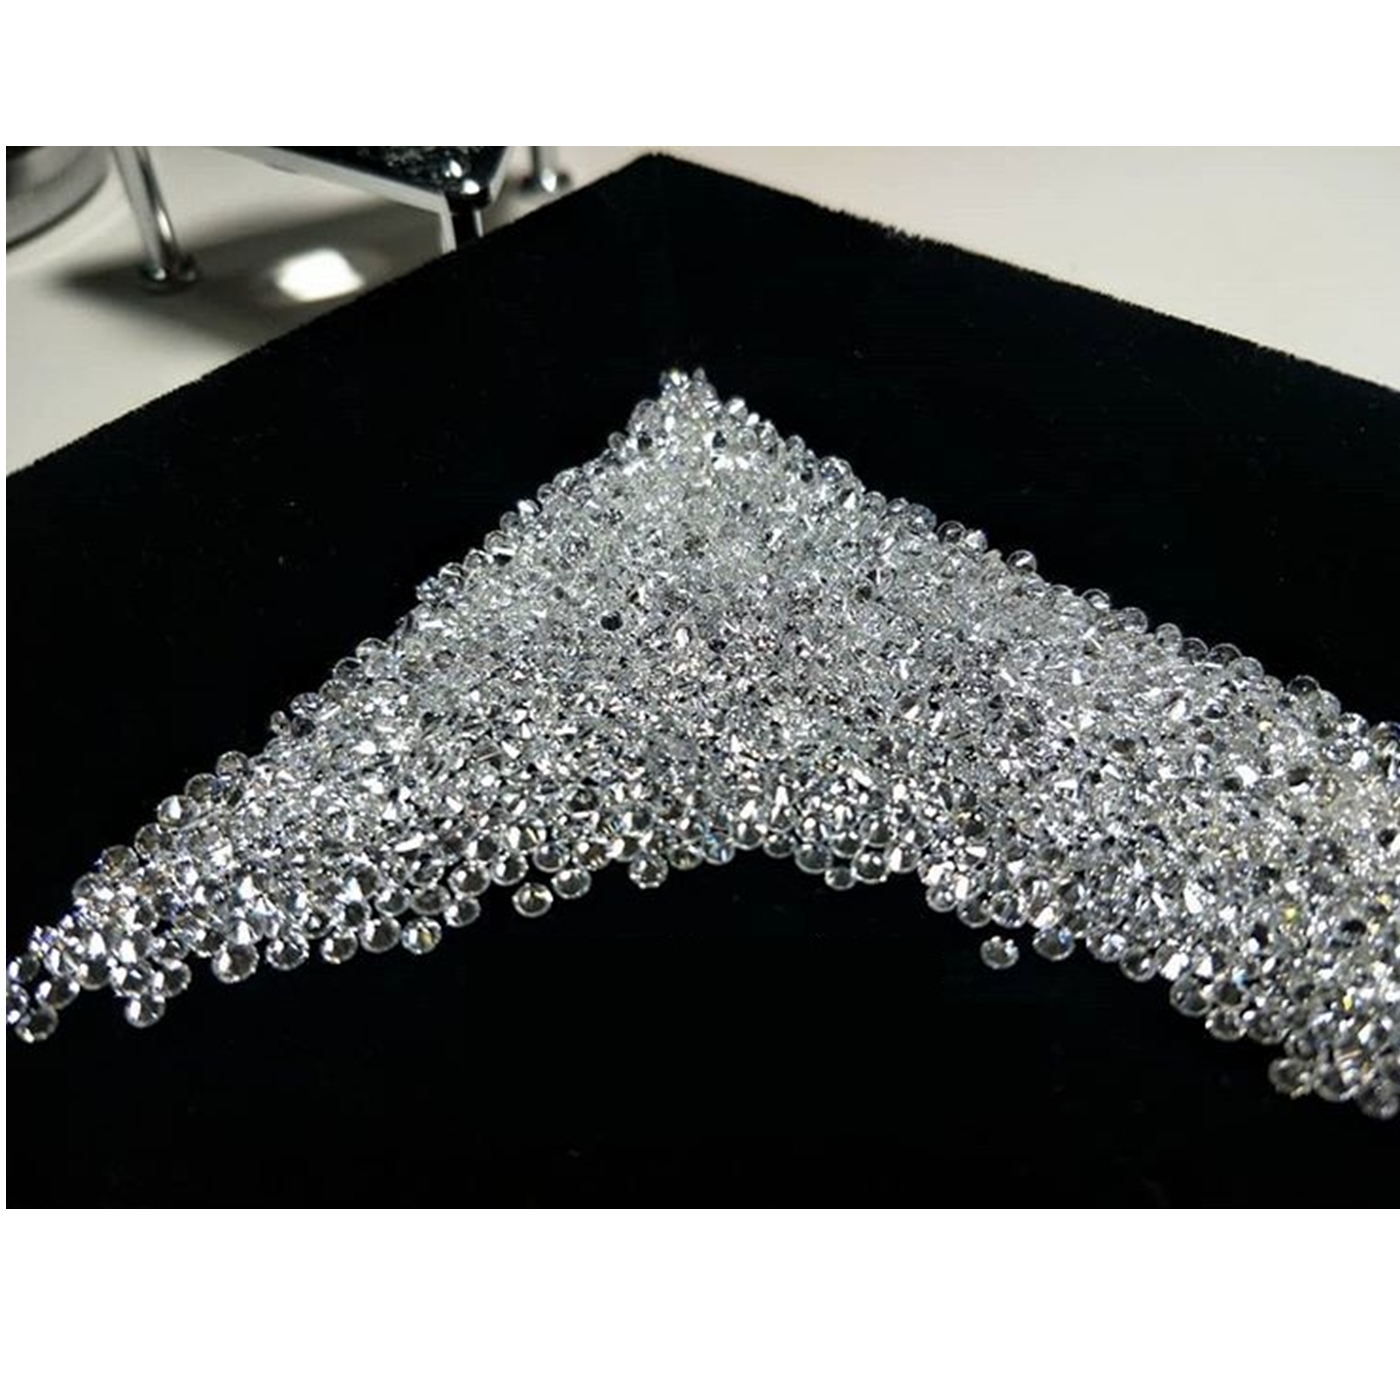 Cvd Diamond 1.25mm GHI VVS VS Round Brilliant Cut Lab Grown HPHT Loose Stones TCW 1